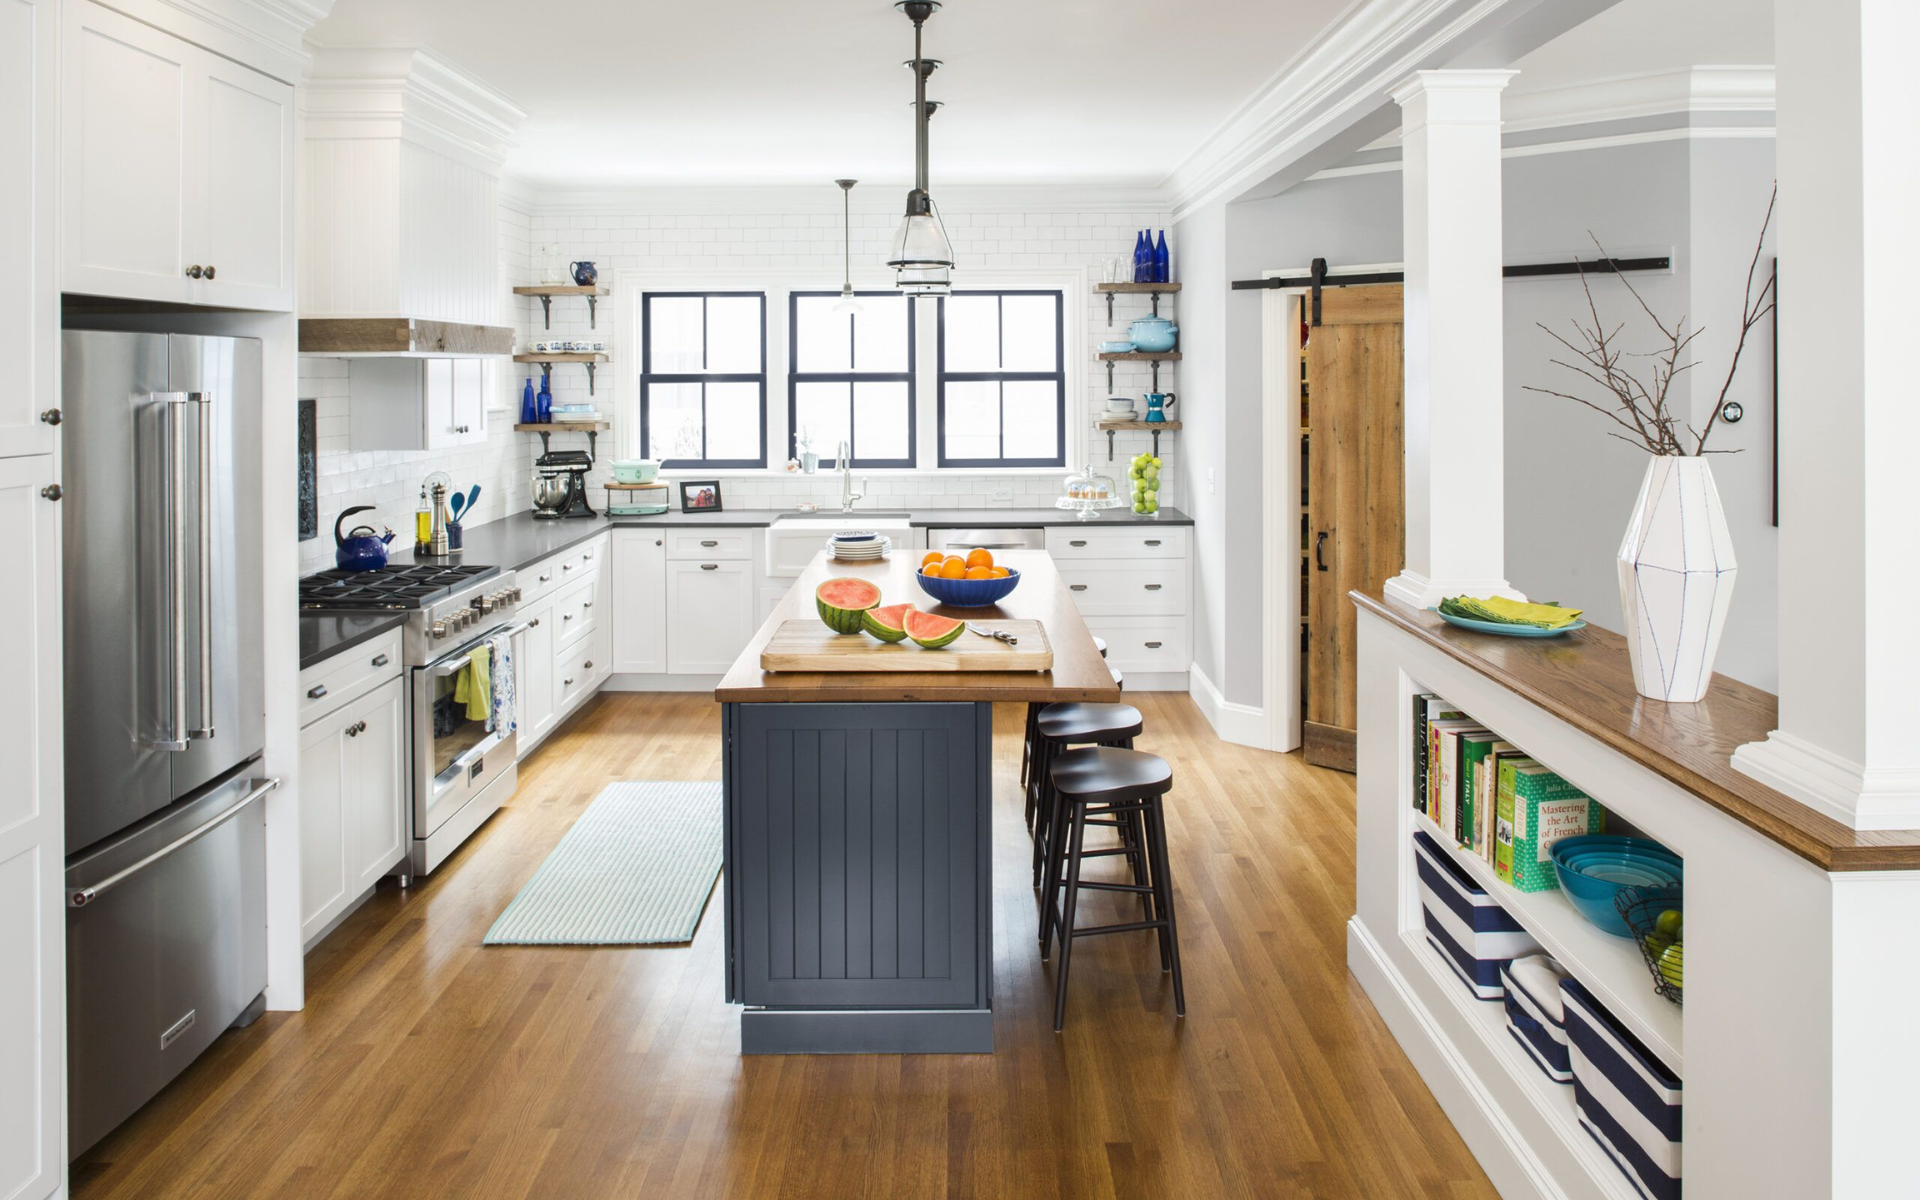 Bright white kitchen with wood flooring